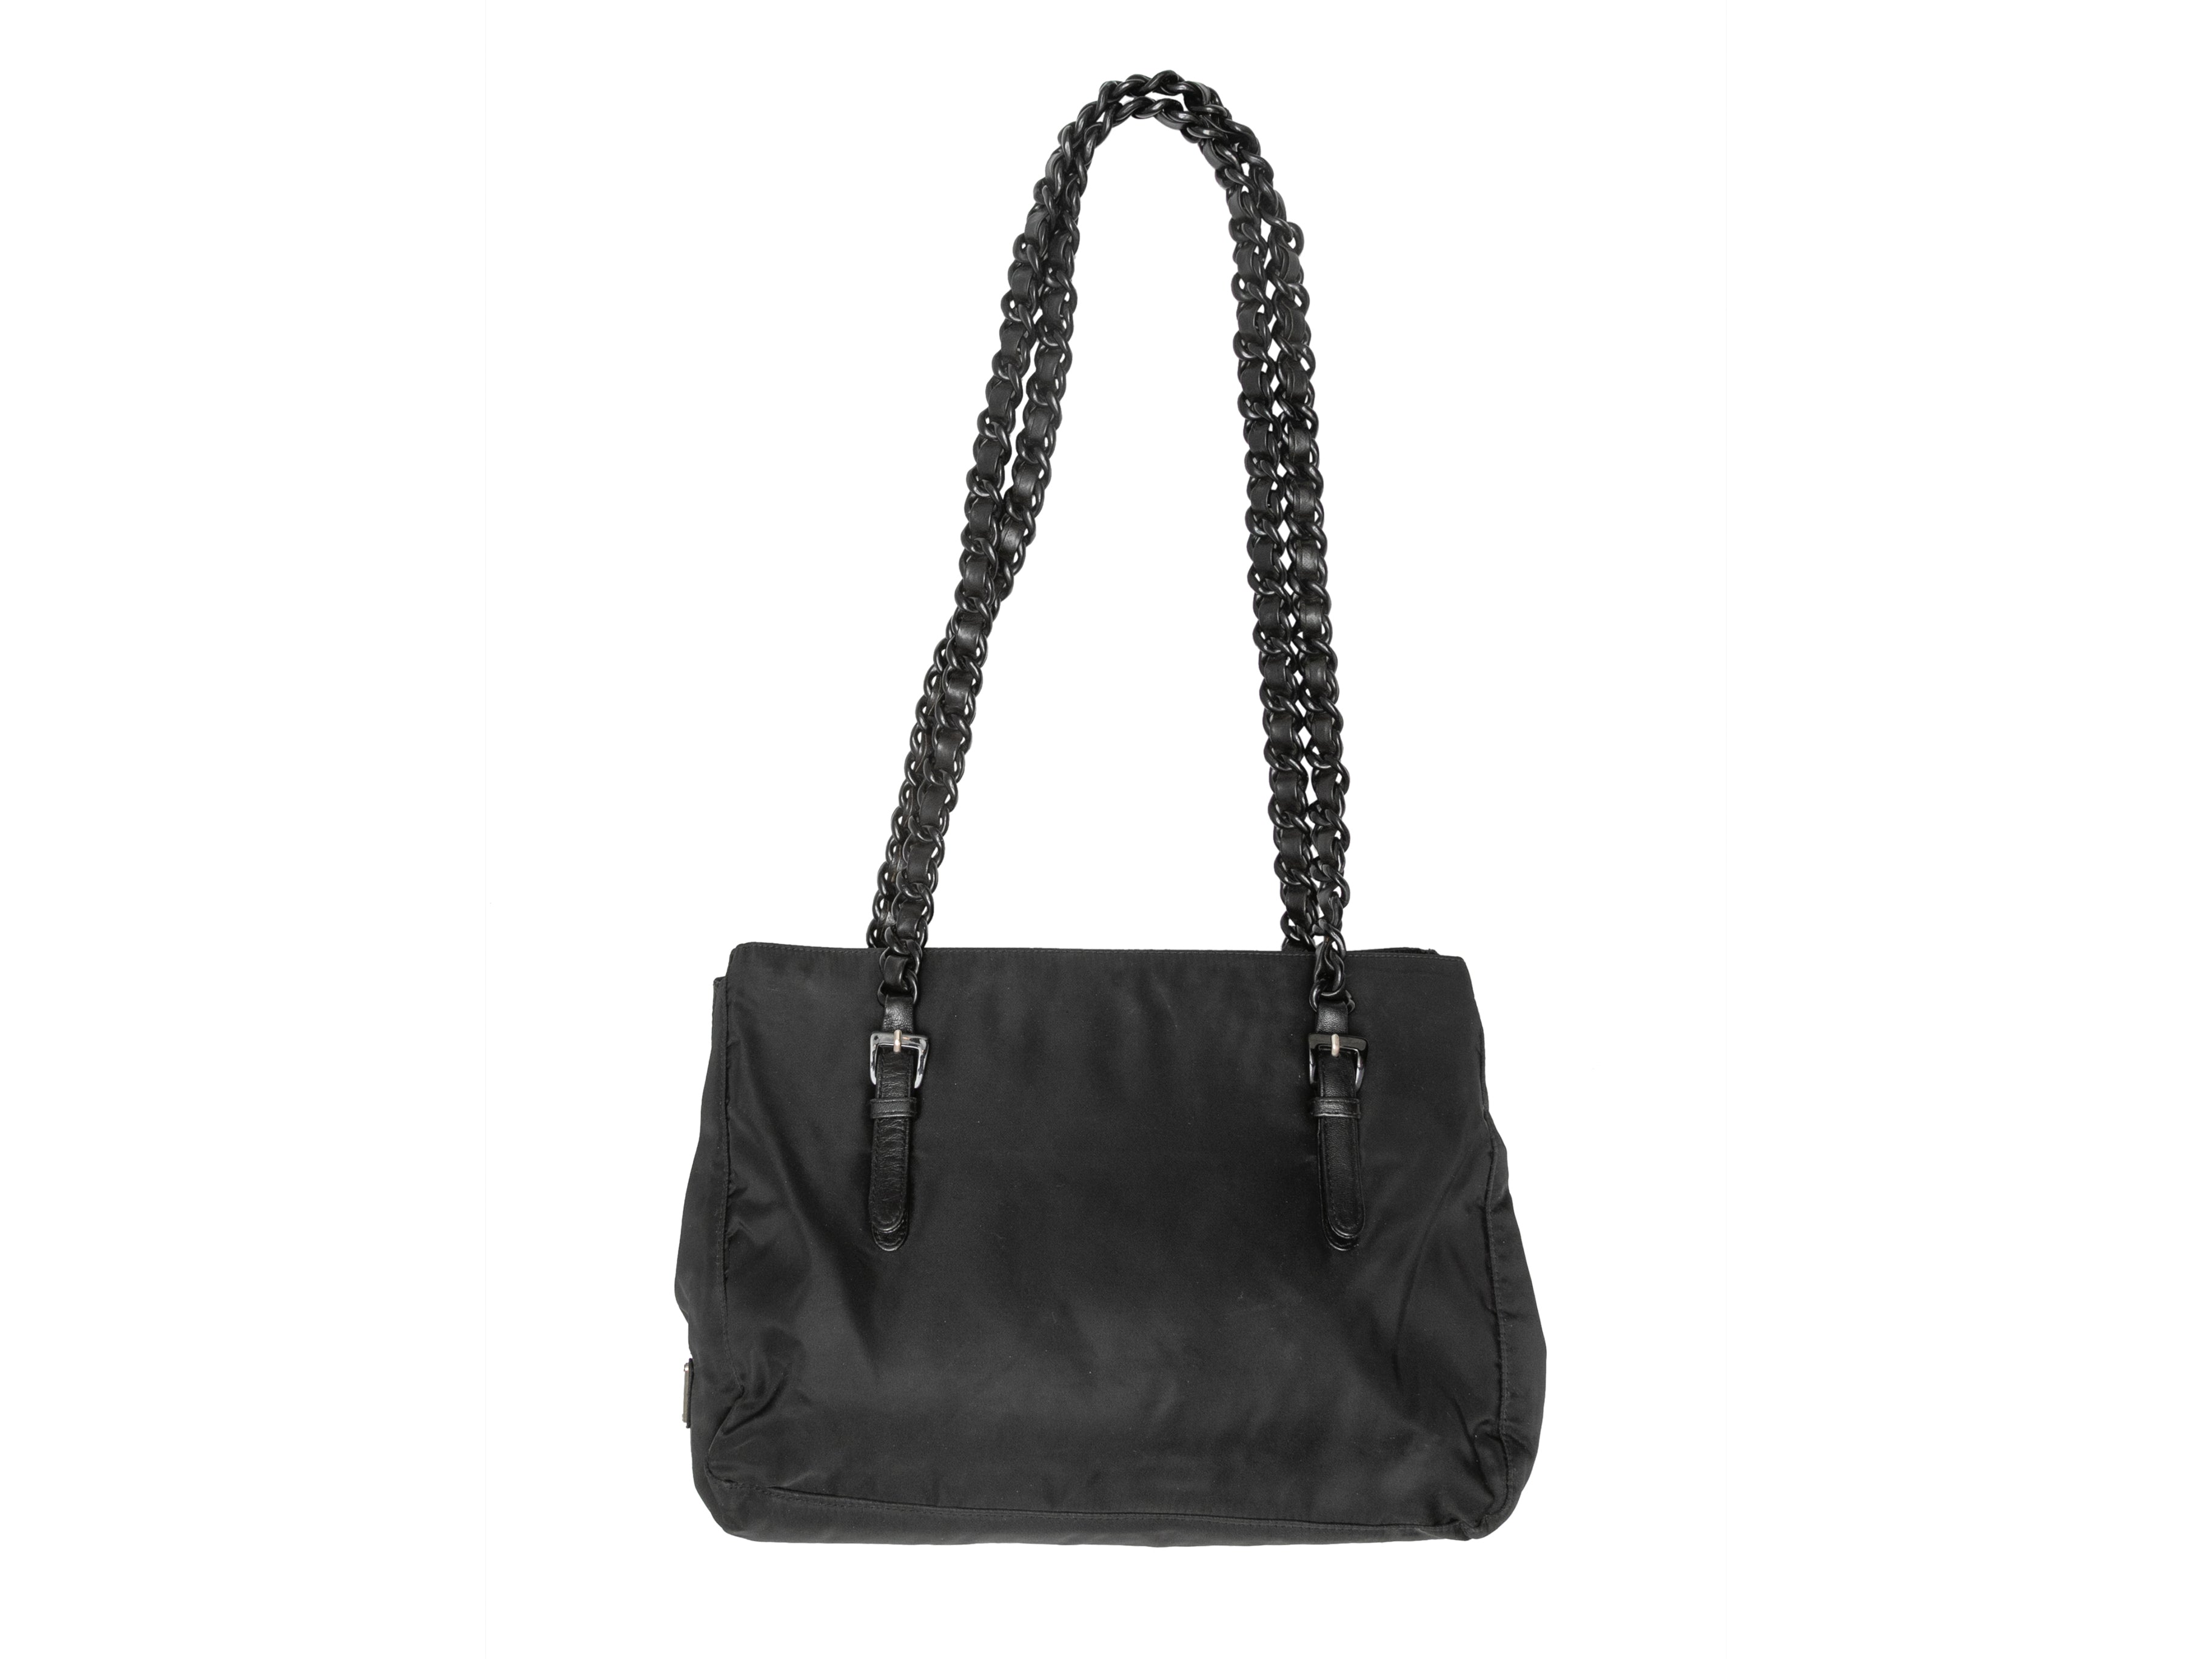 Prada Authentic Vintage Acrylic Chain Black Nylon Shoulder Bag